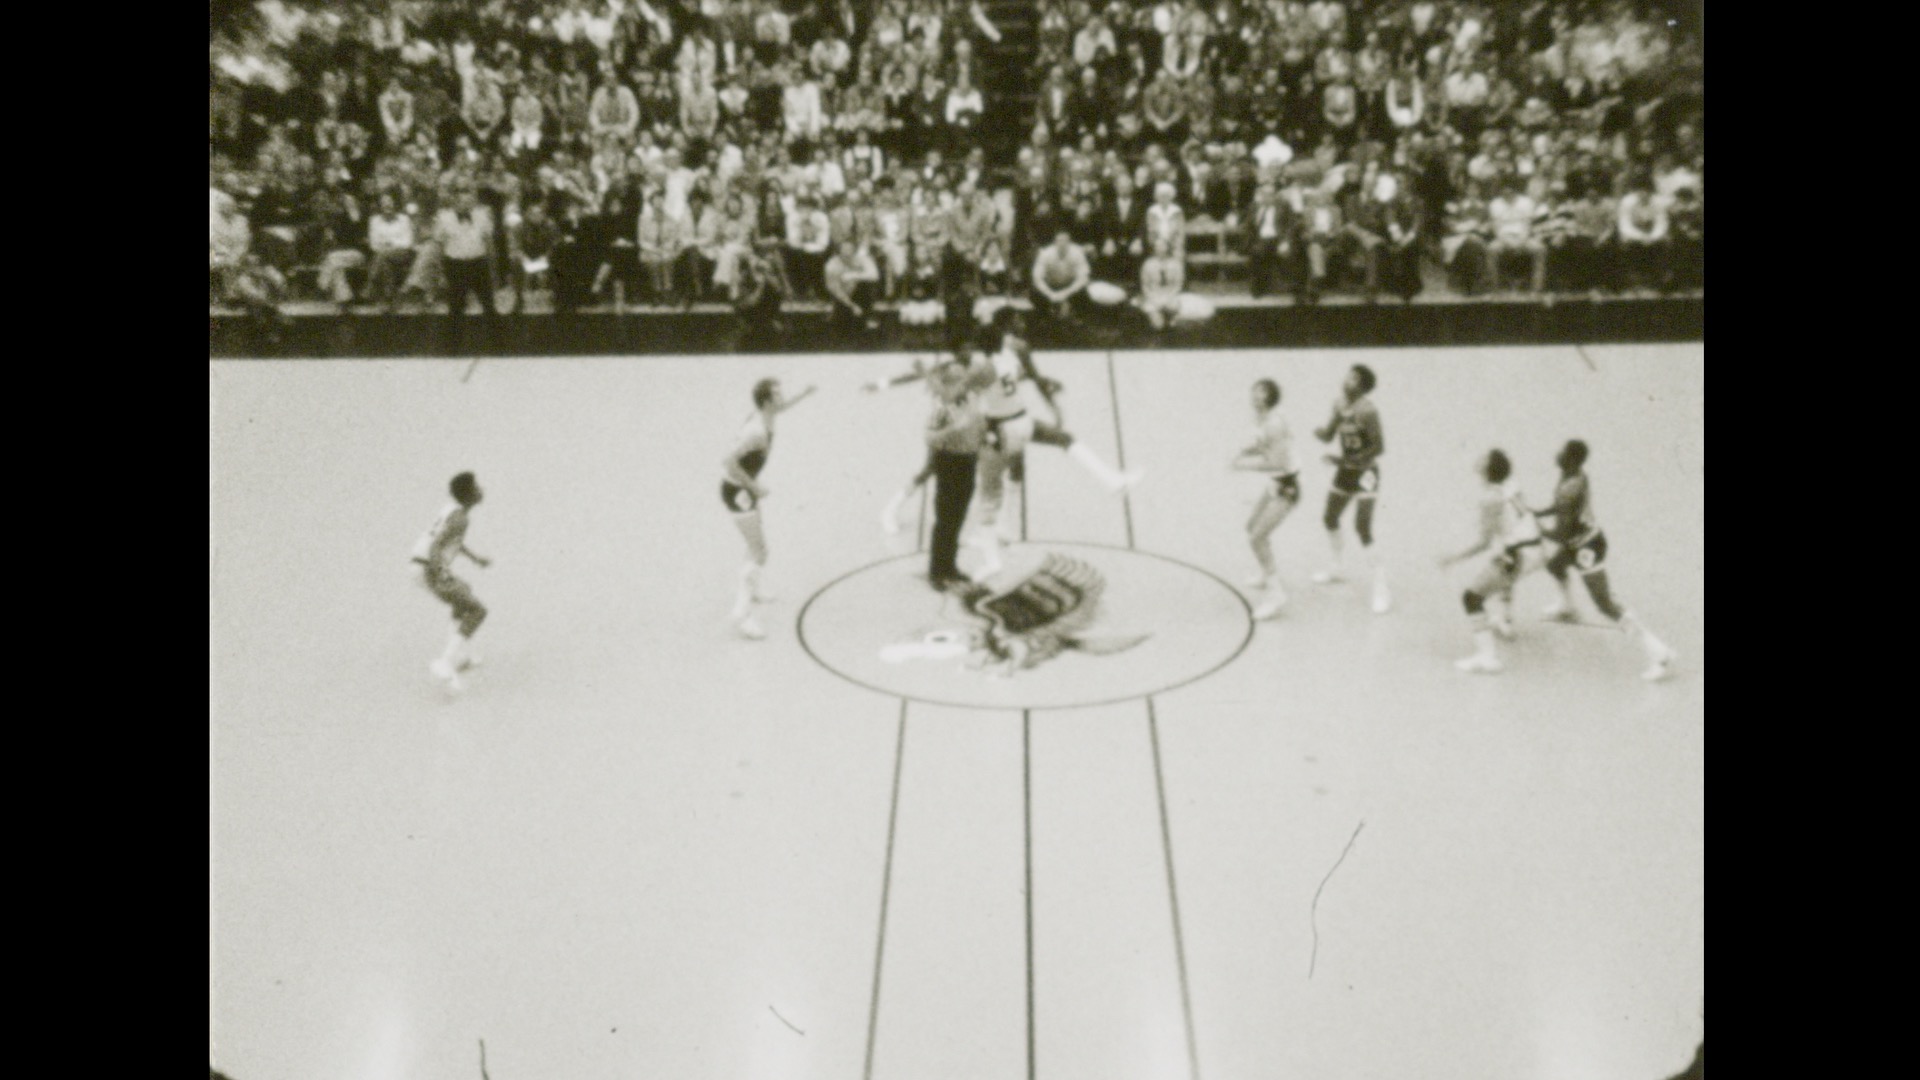 MSU Basketball vs. Iowa (away), 1977